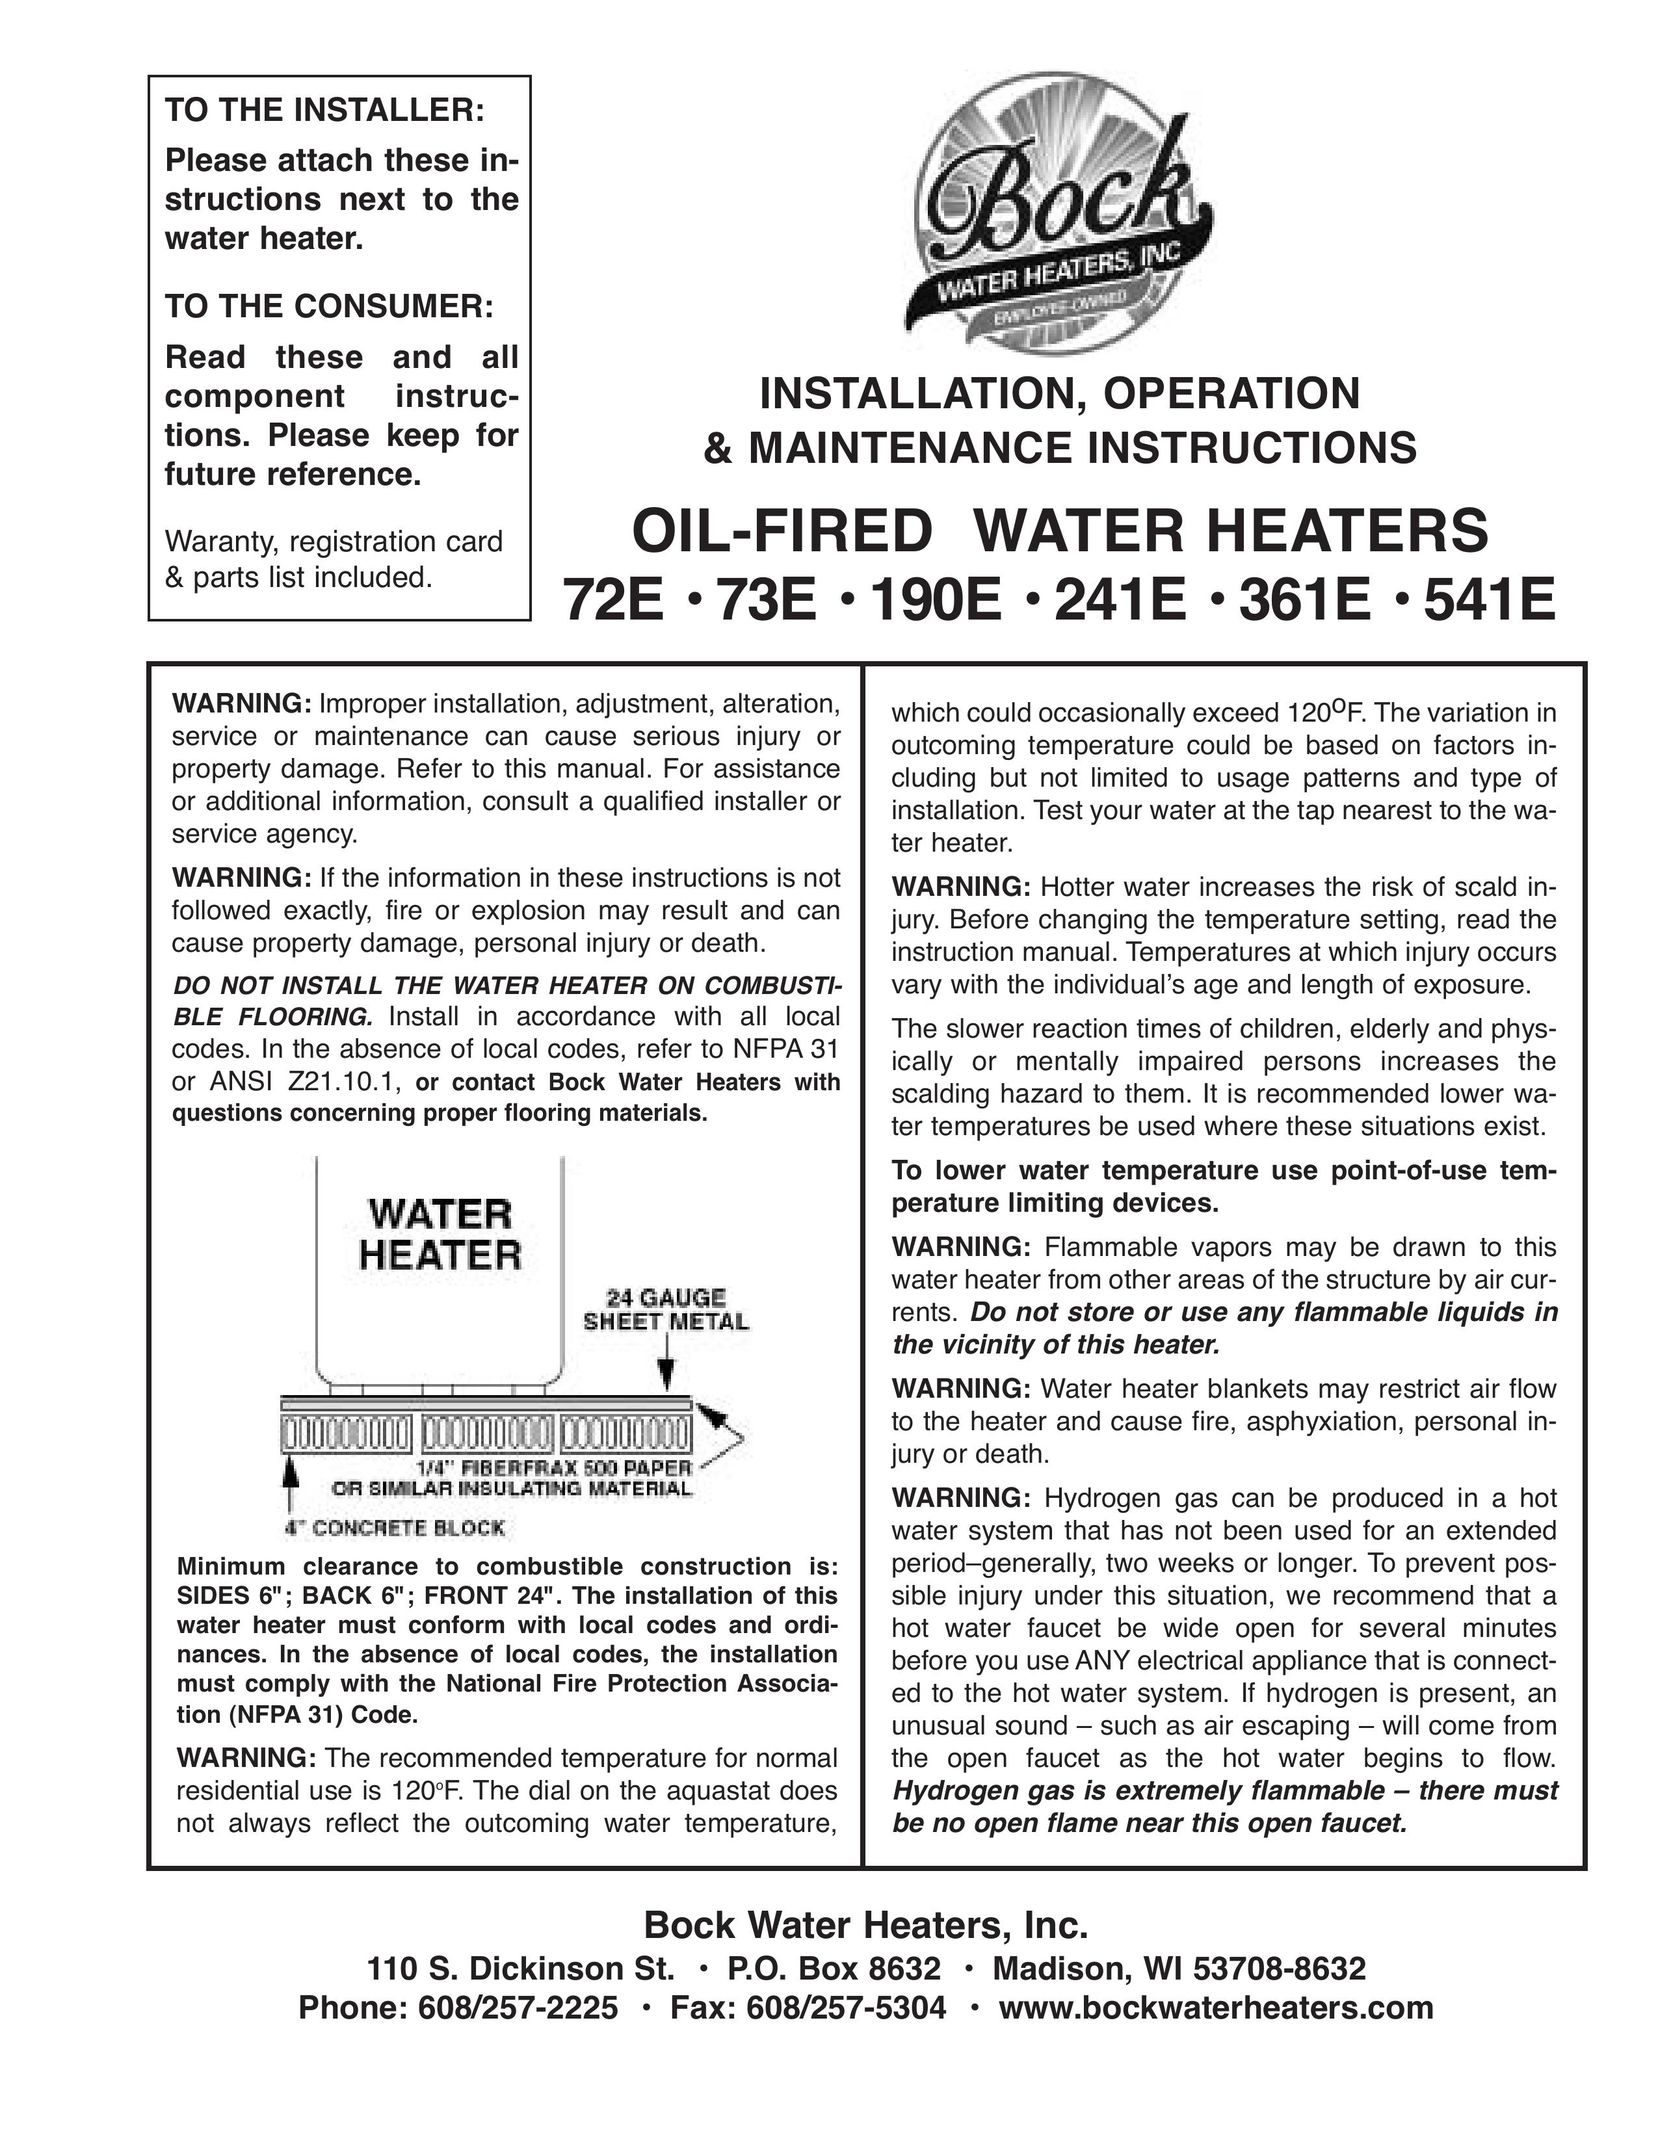 Bock Water heaters 241E Water Heater User Manual